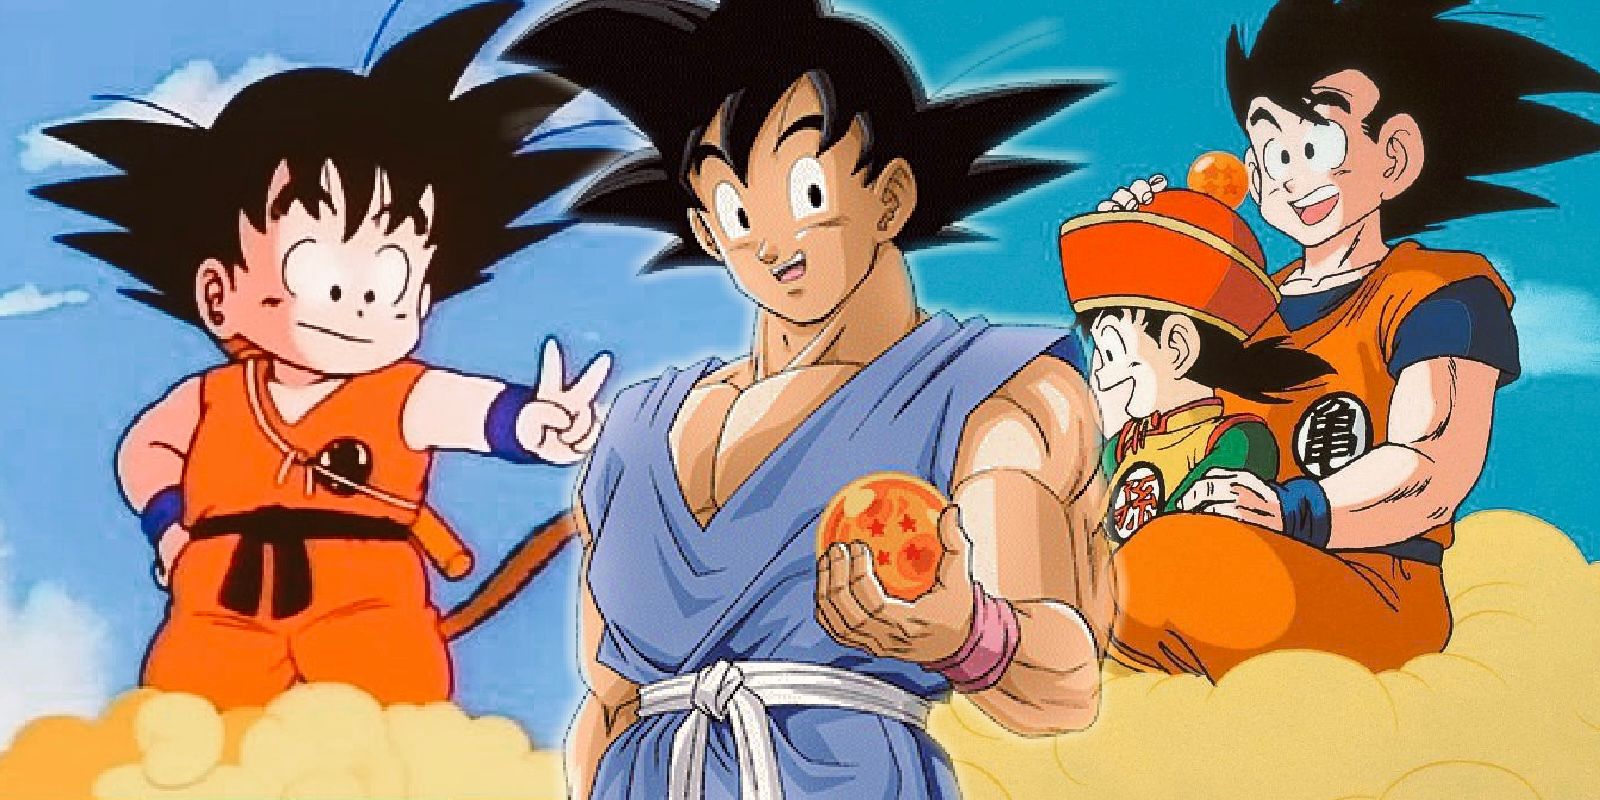 Goku in dragon ball, dragon ball z and GT with Gohan